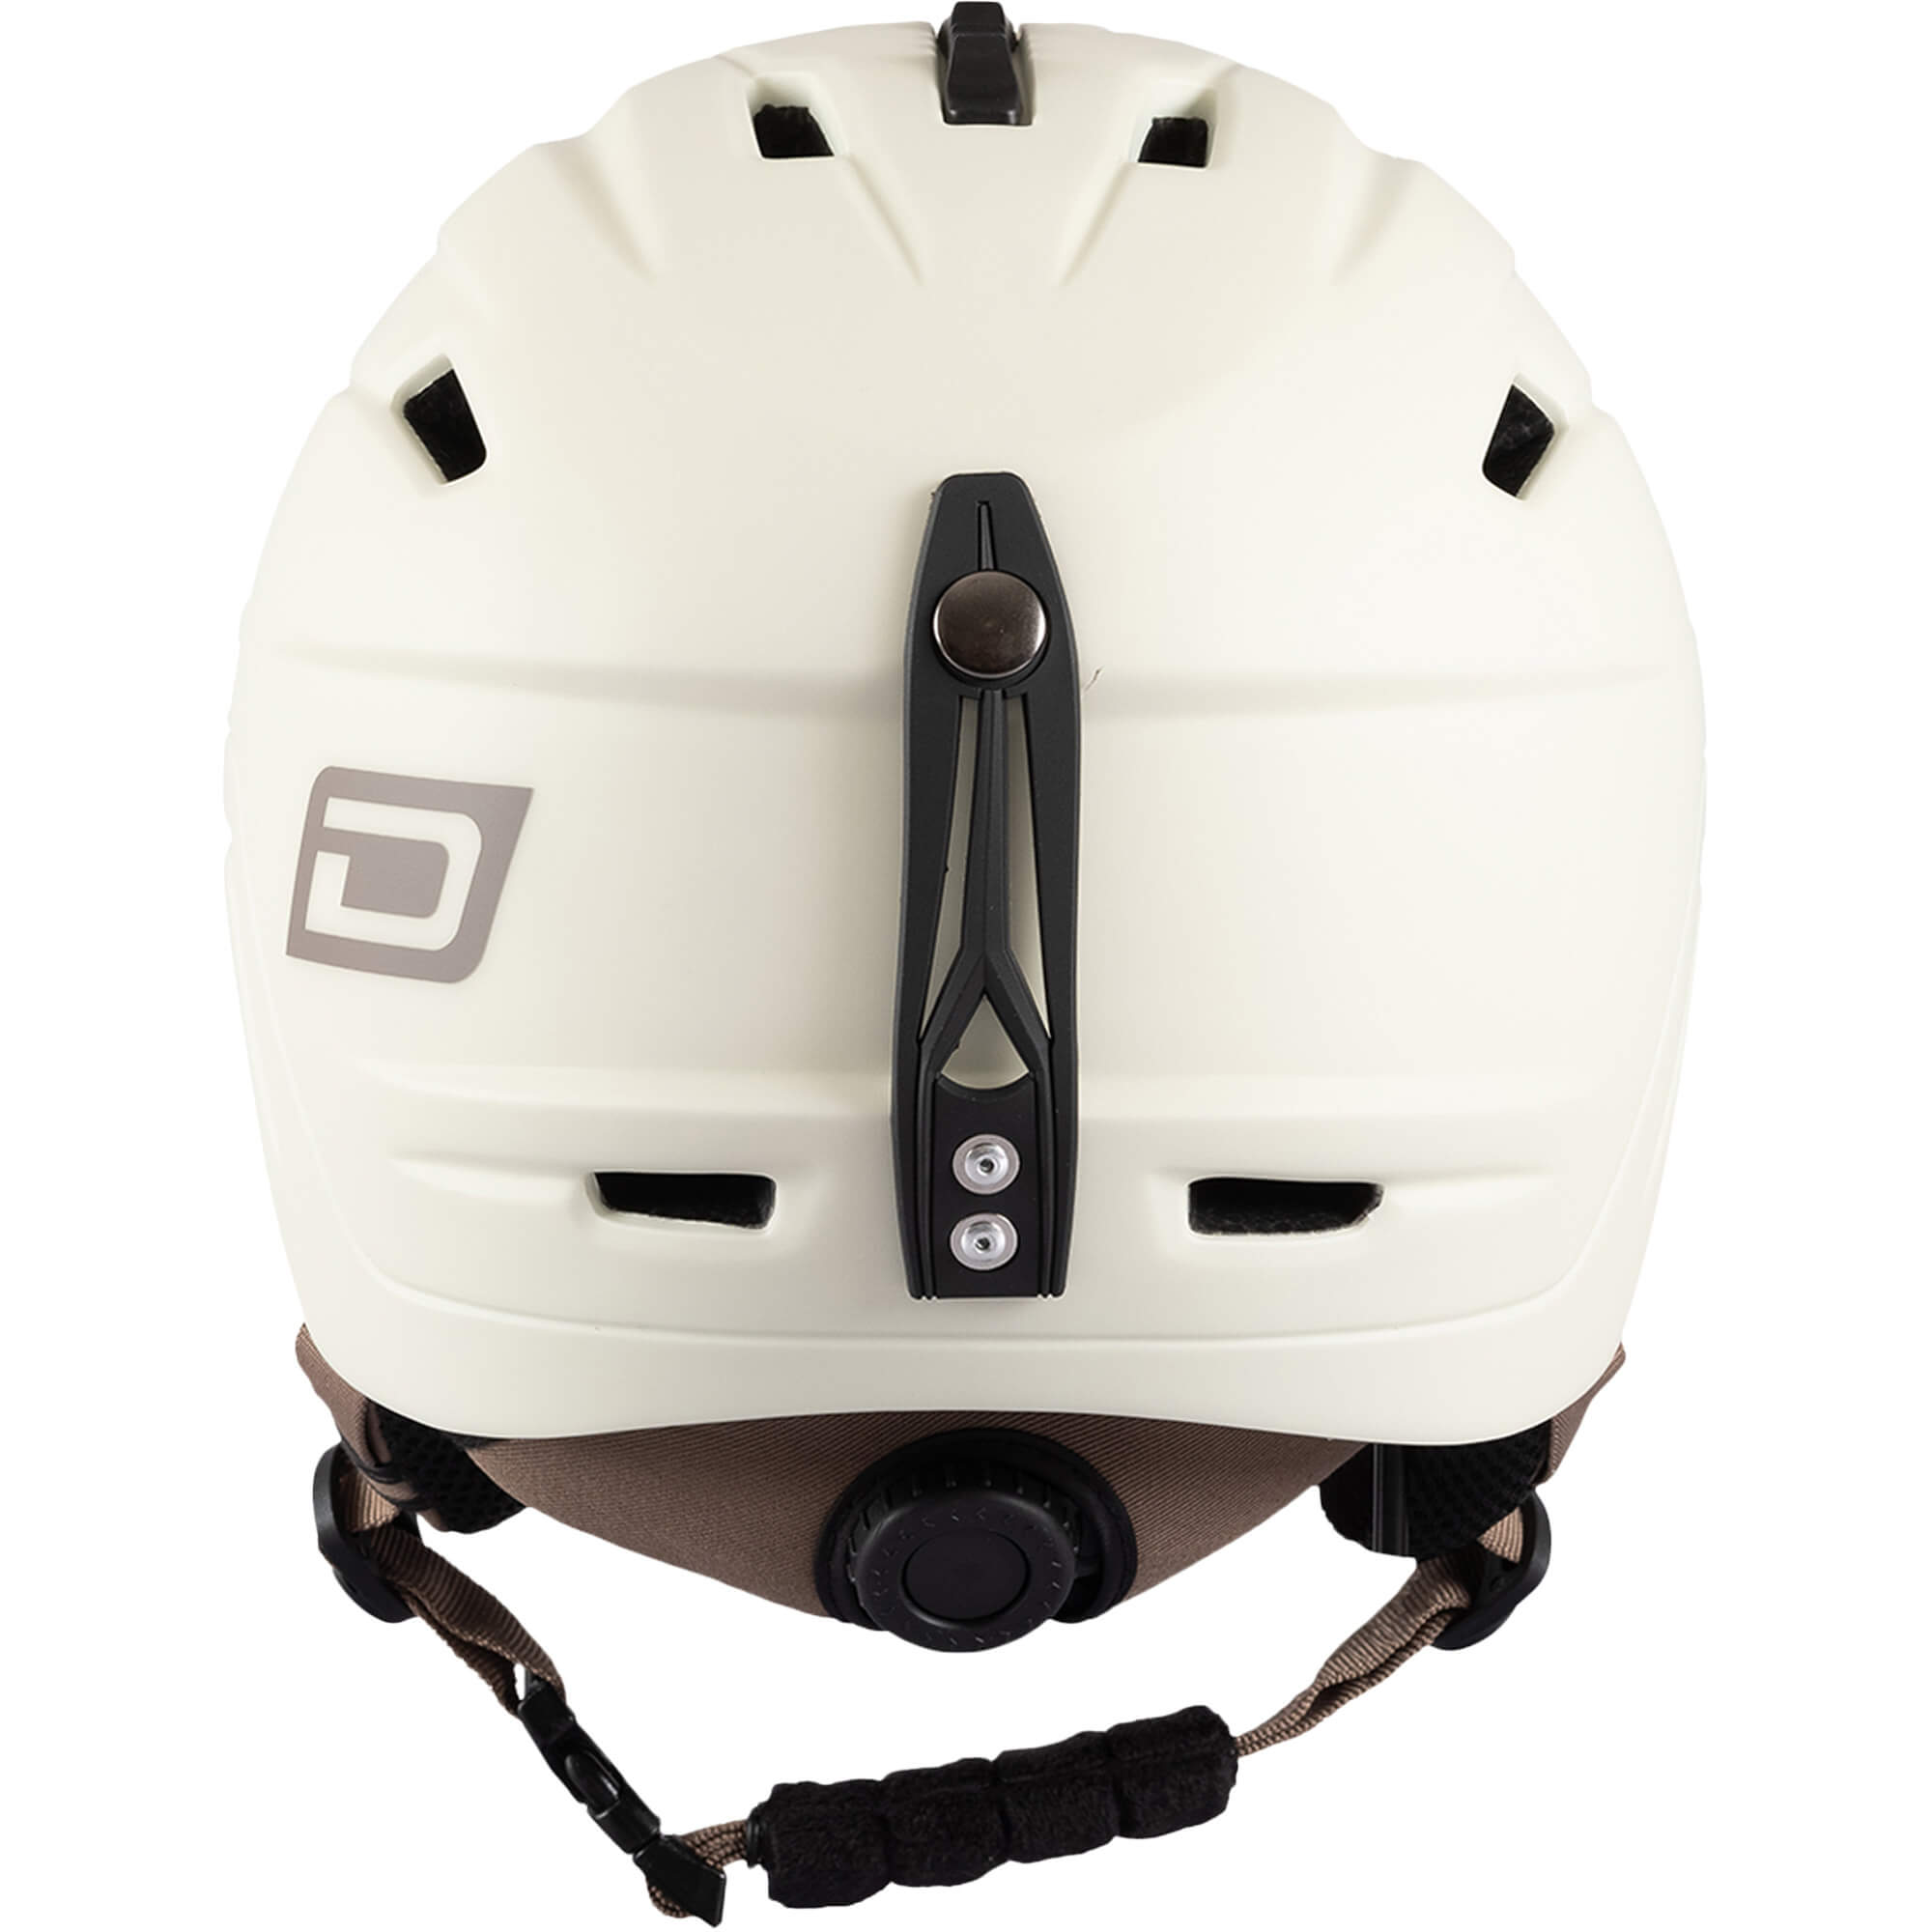 Dirty Dog Hydra Ski/Snowboard Helmet